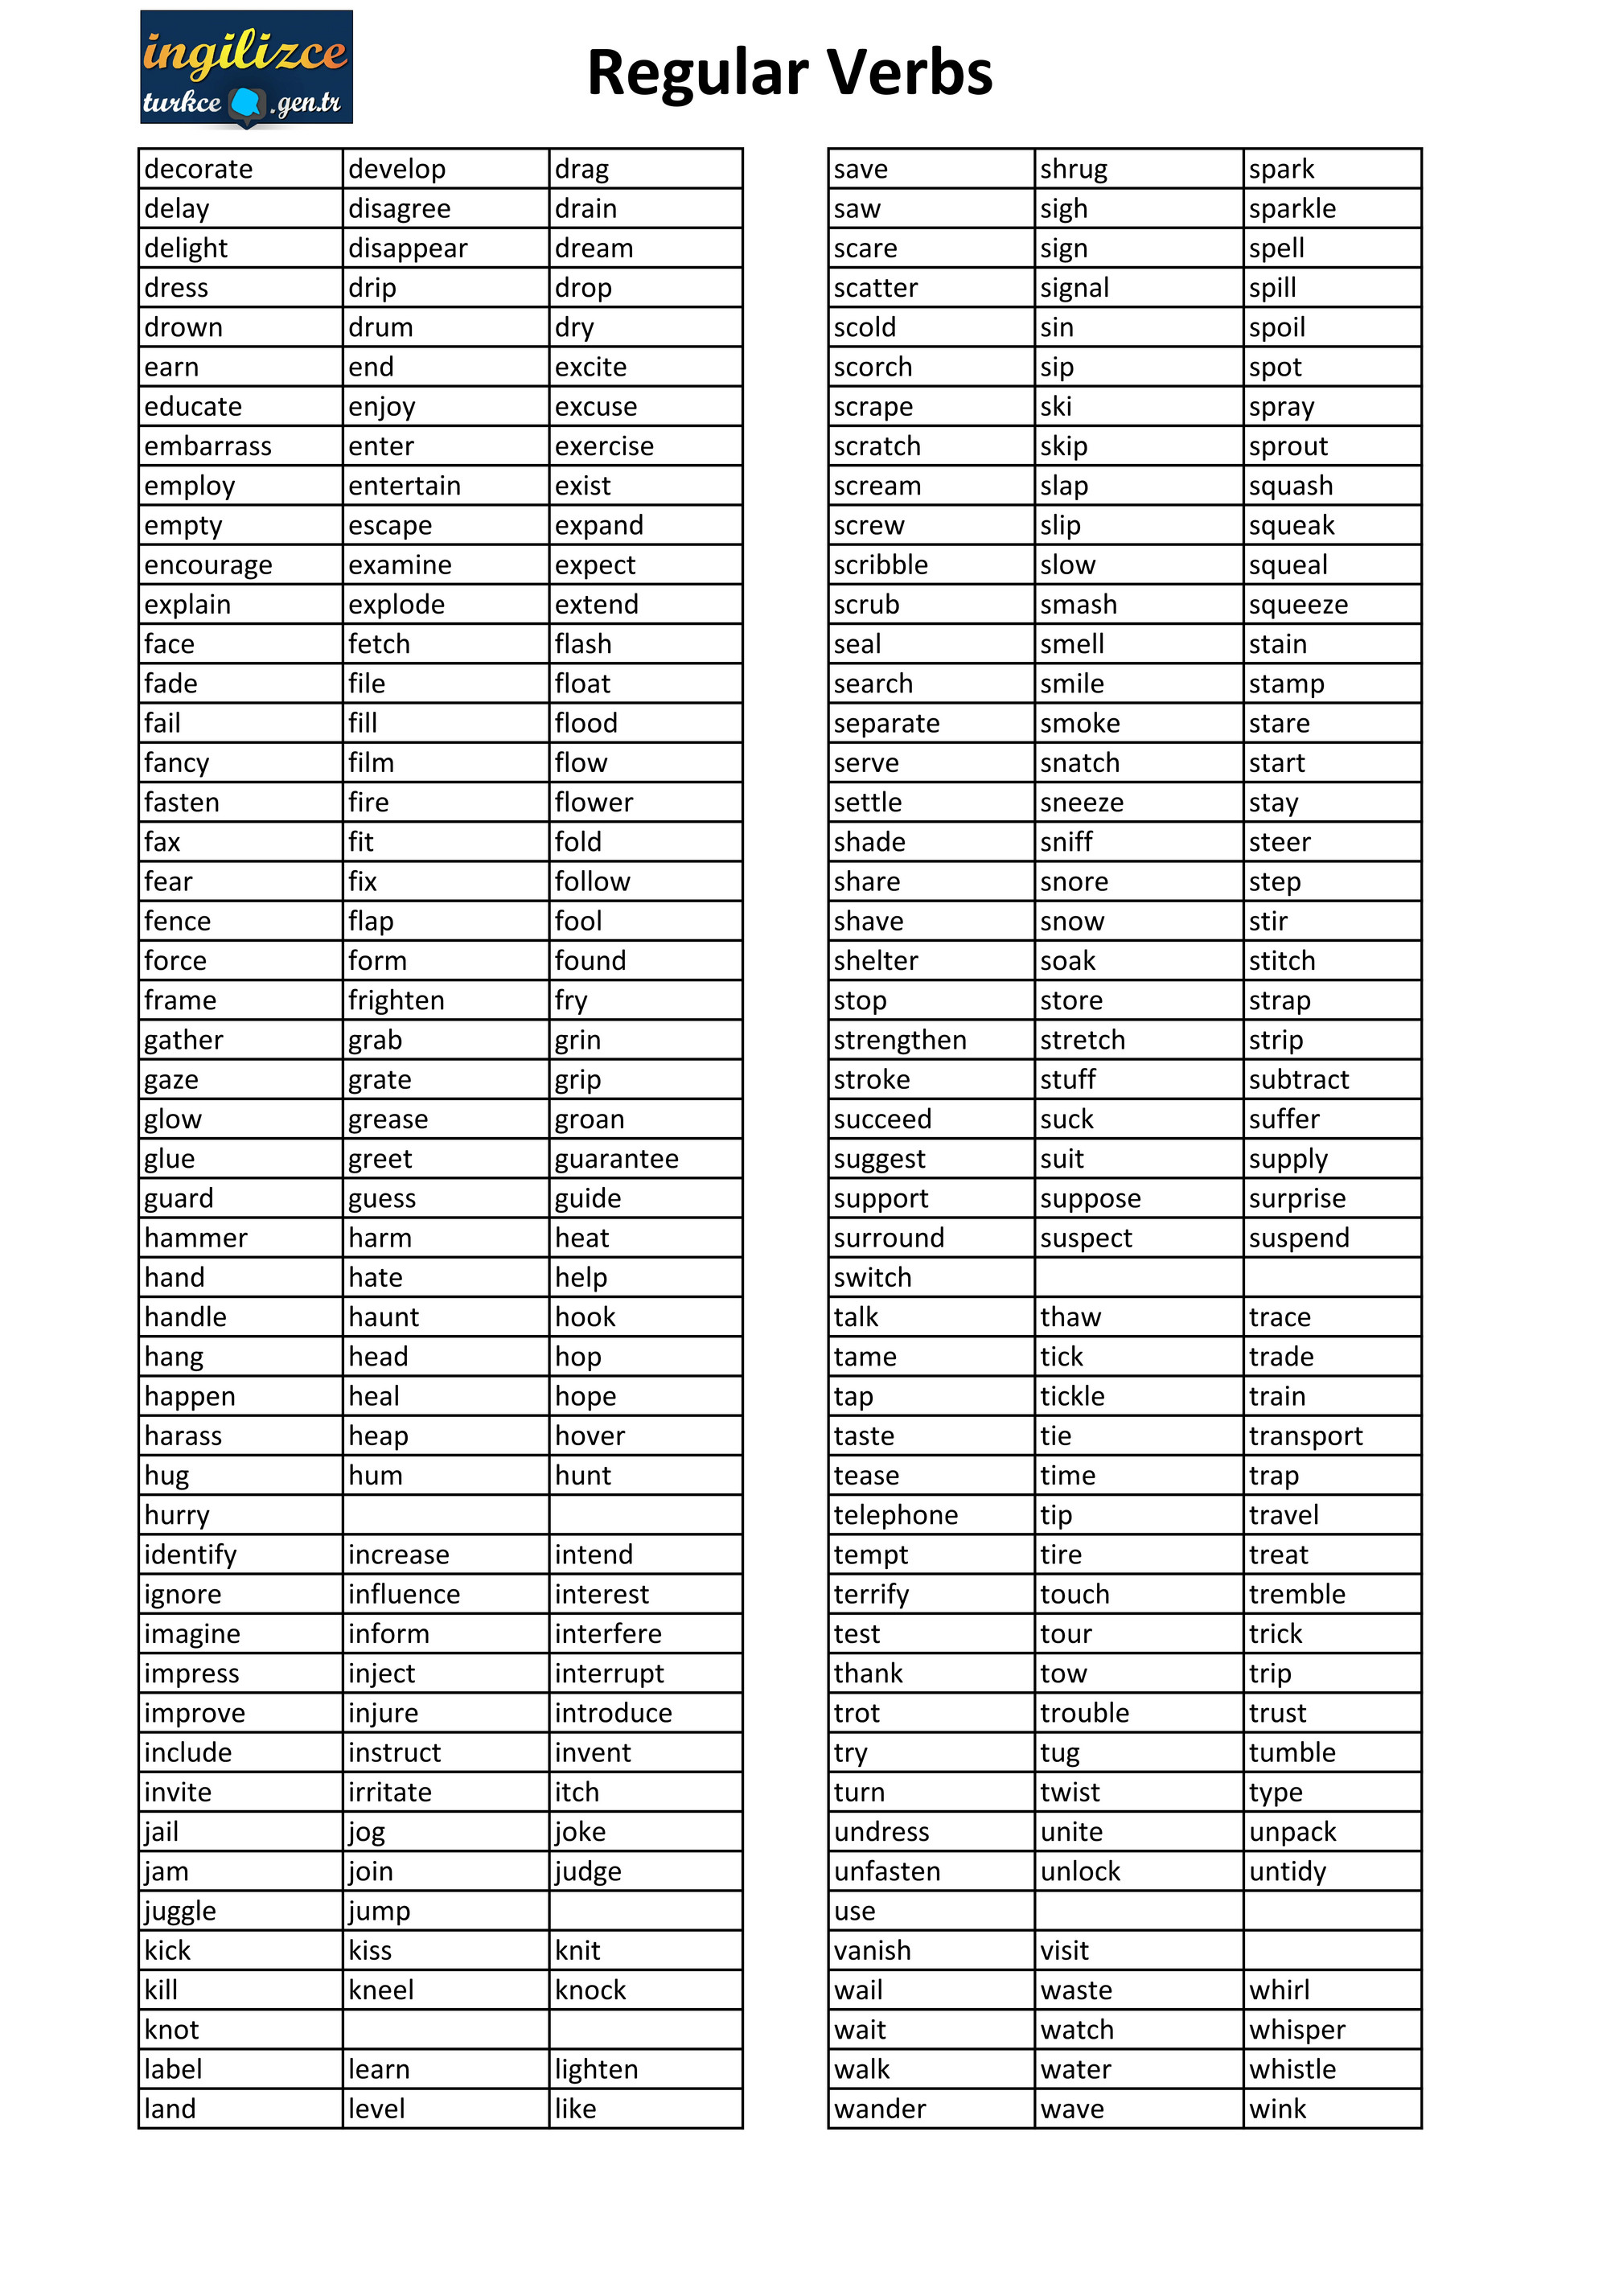 regular verbs list - regular verbs list - Page 2-3 - Created with ...